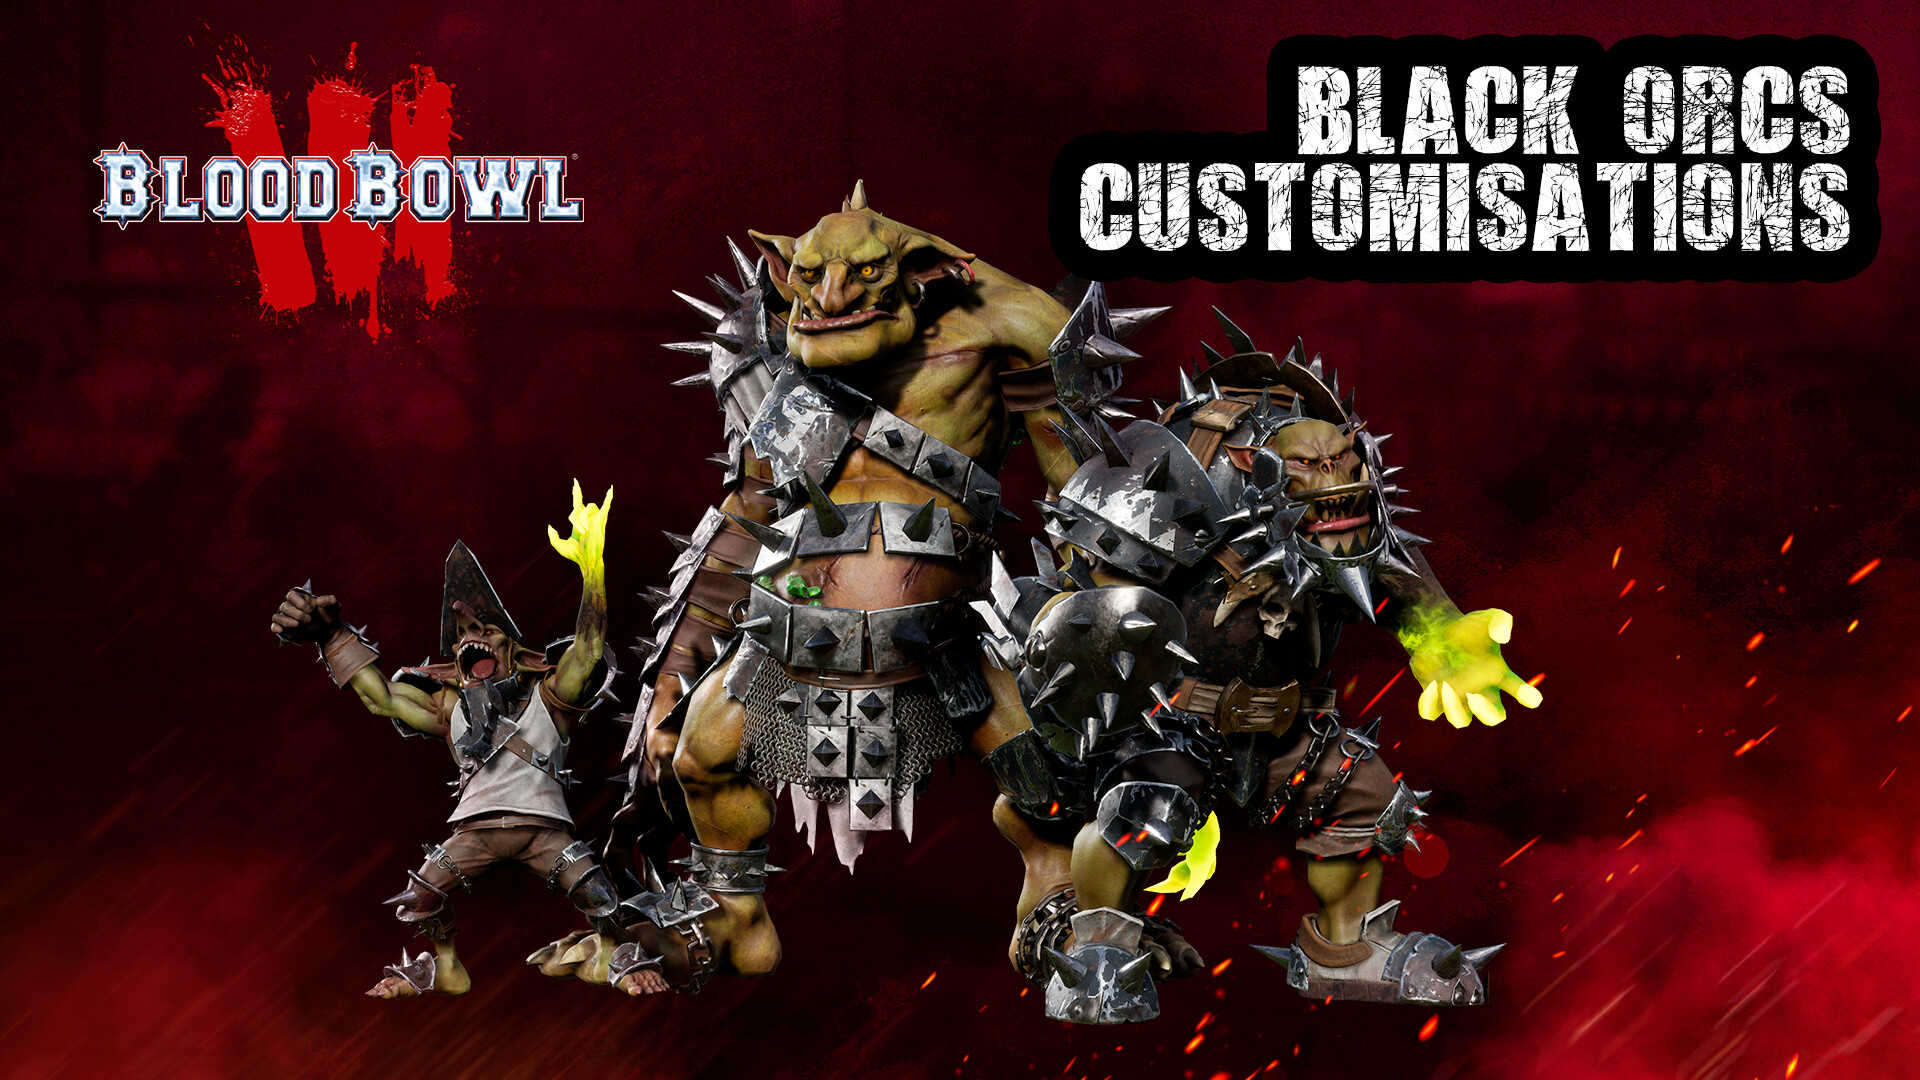 [$ 3.82] Blood Bowl 3 - Black Orcs Customizations DLC Steam CD Key